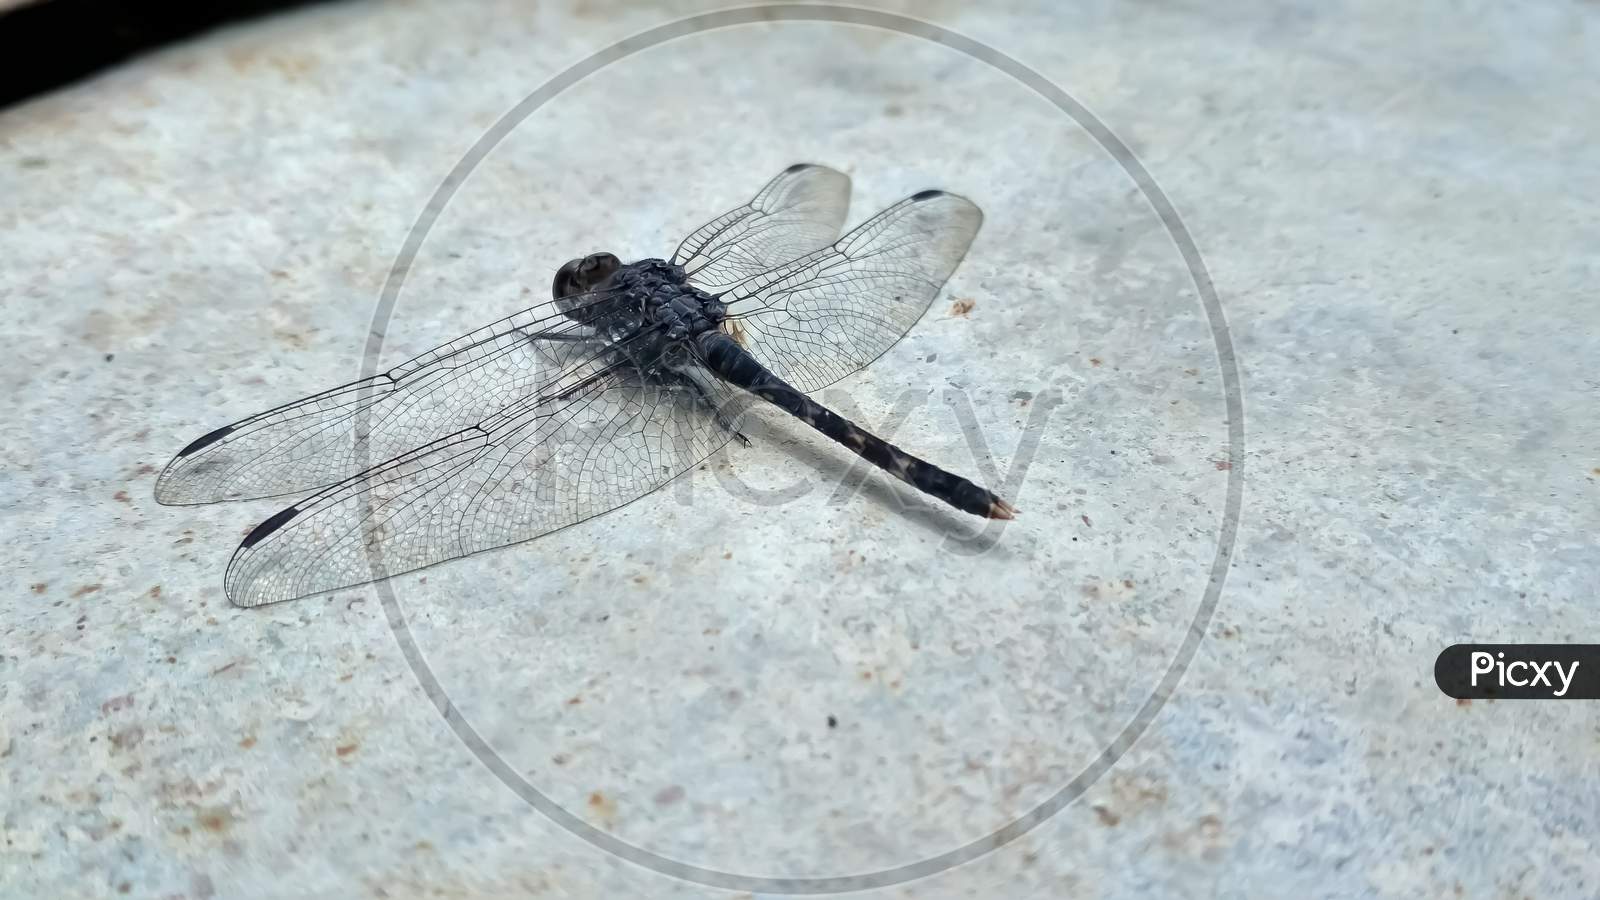 Dragonfly closeup photo.